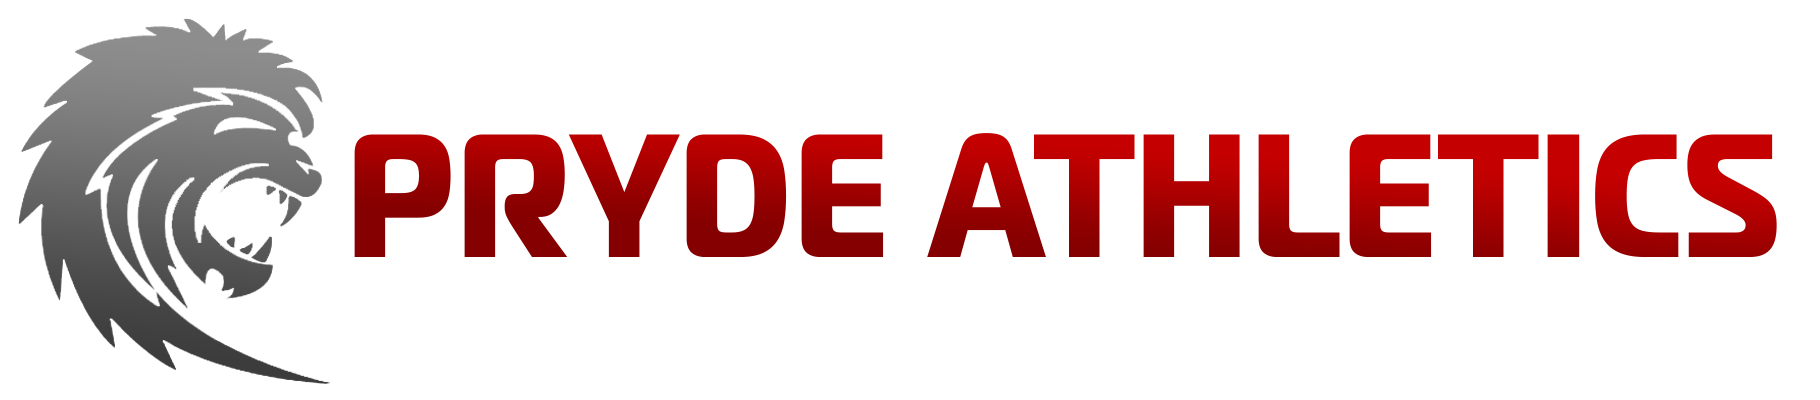 pryde athletics logo